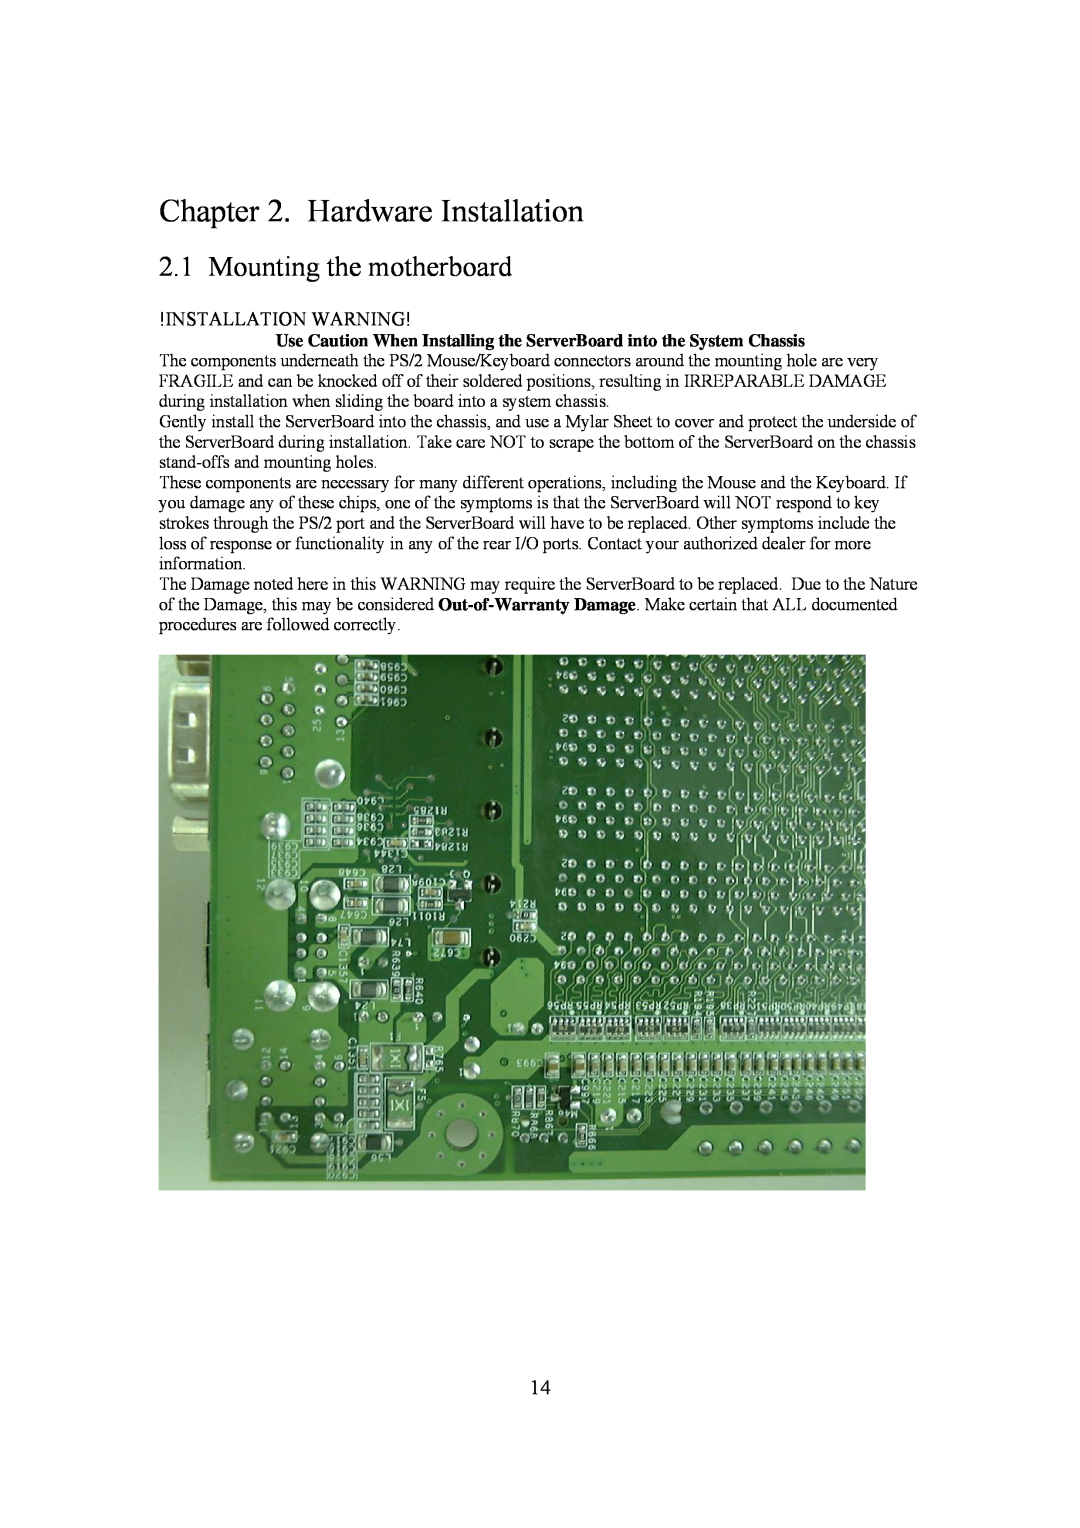 Intel LH500 user manual Hardware Installation, Mounting the motherboard, Installation Warning 